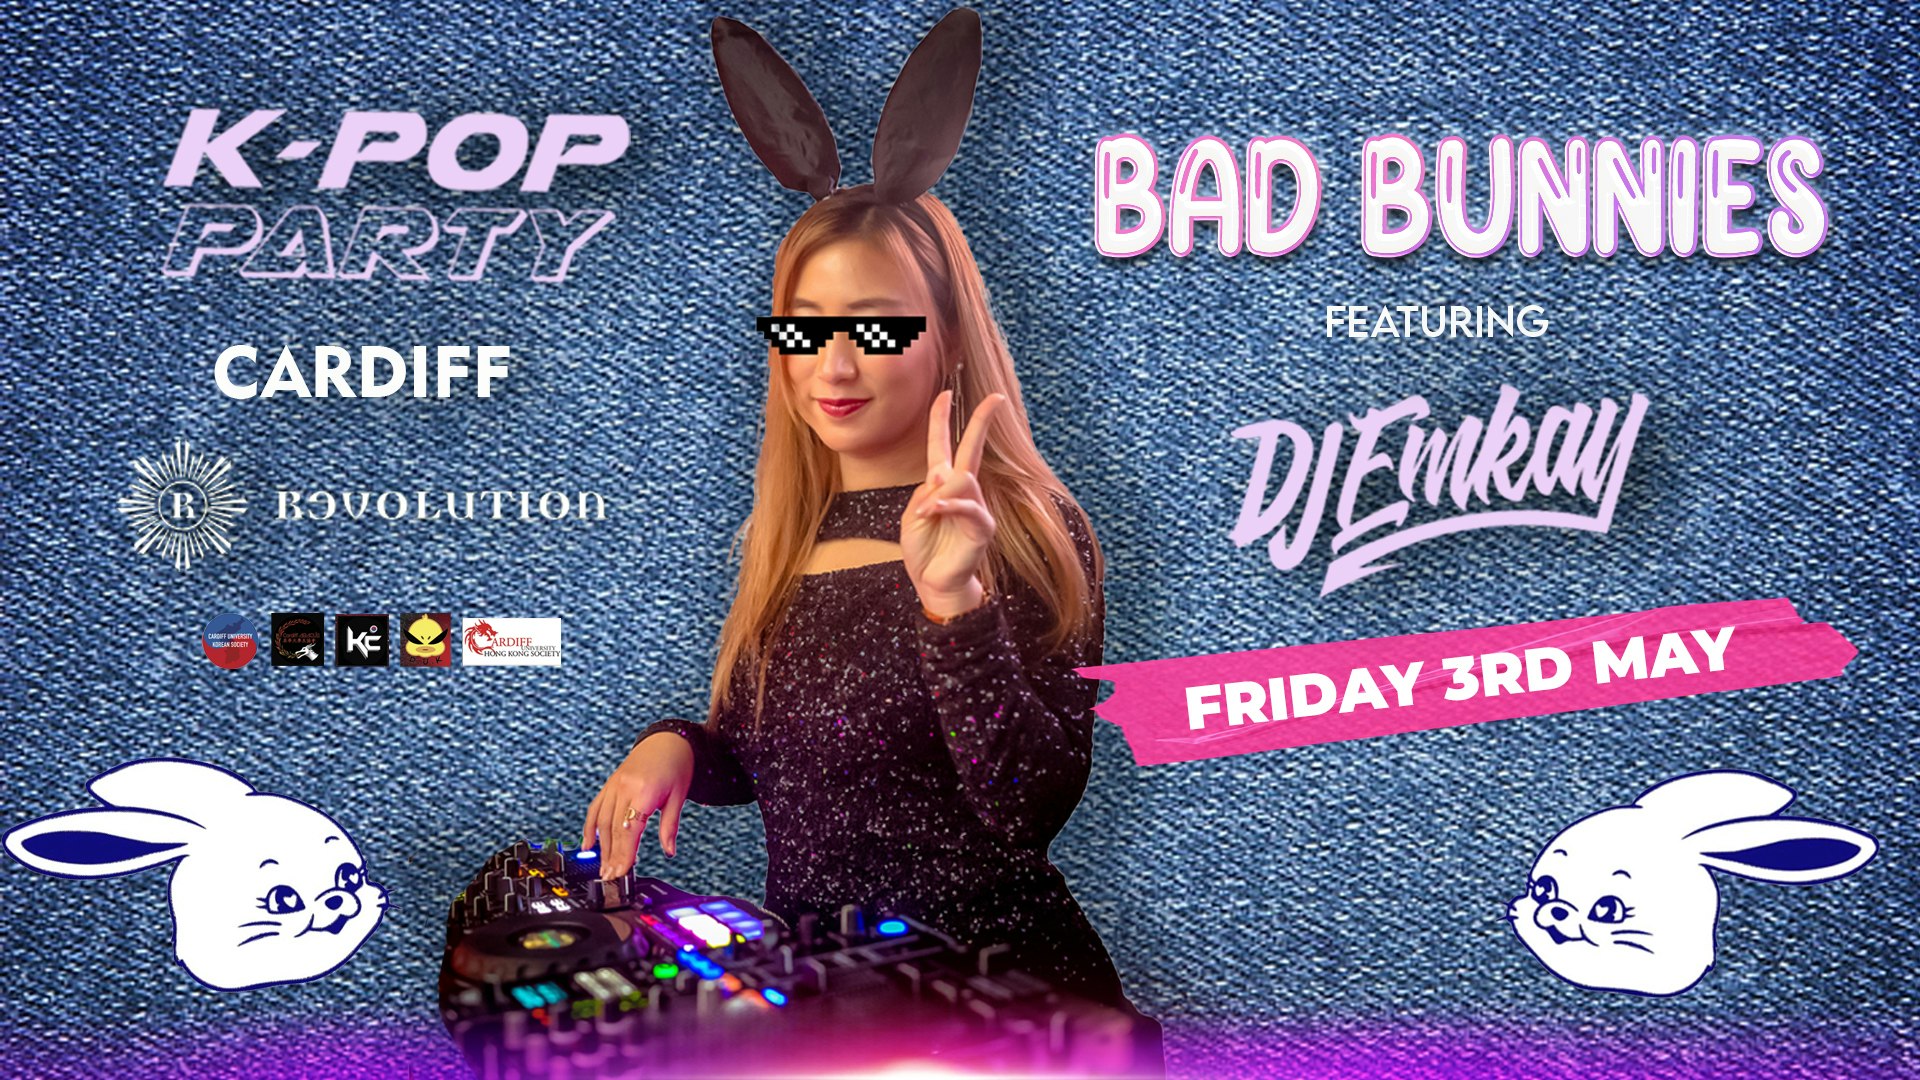 K-Pop BAD BUNNIES Party Cardiff with DJ EMKAY | Friday 3rd May